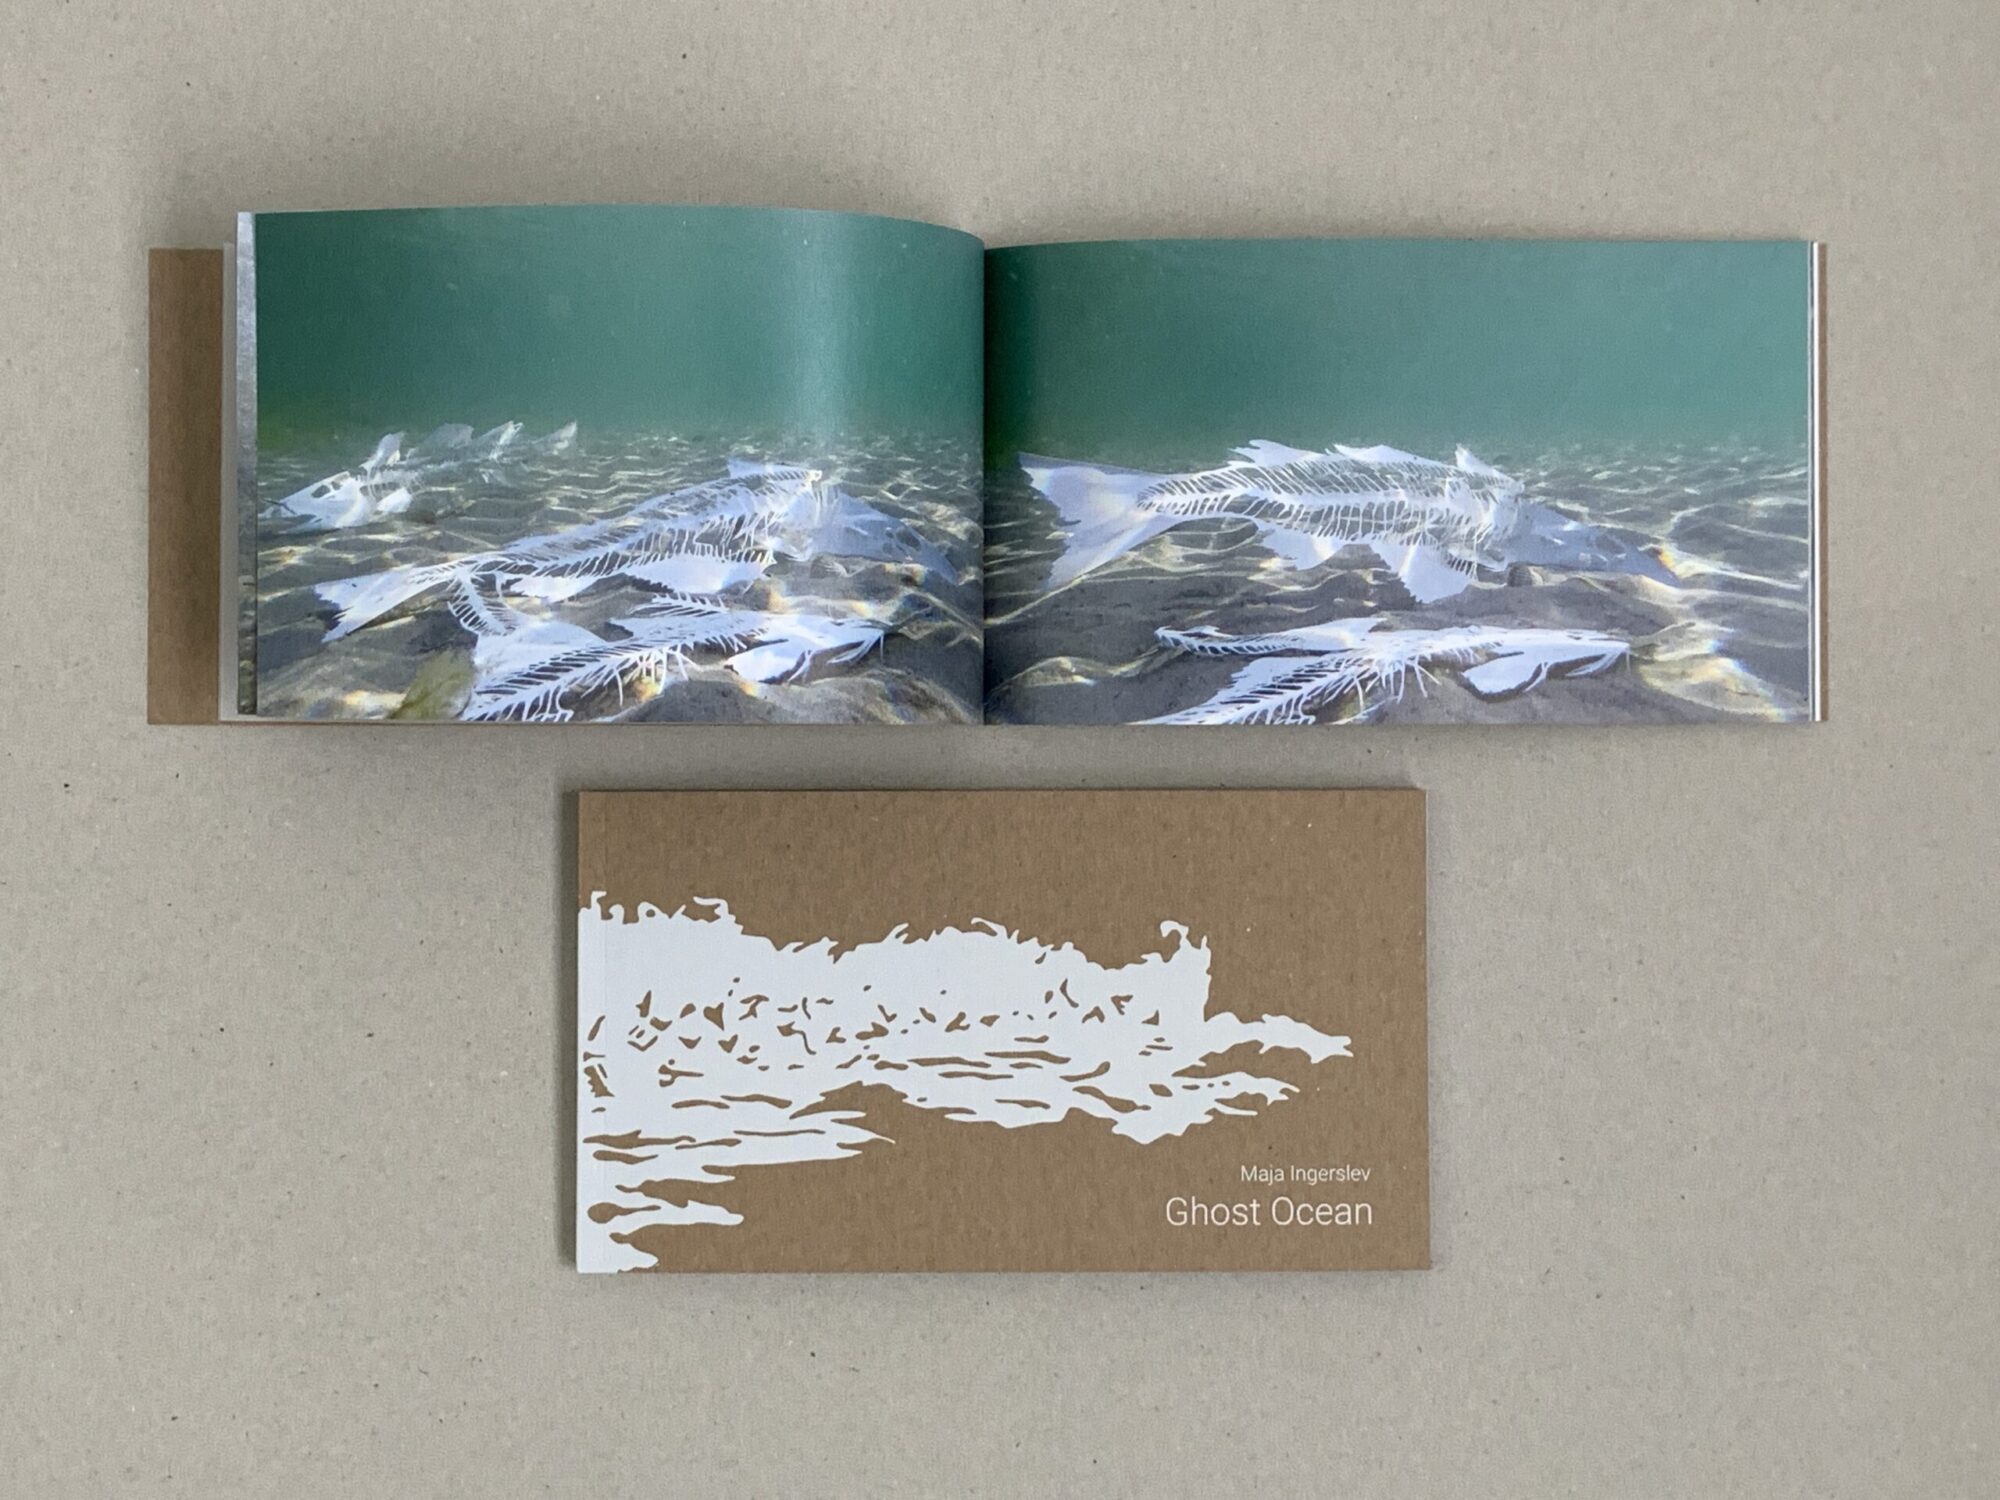 Book launch: Ghost Ocean by Maja Ingerslev